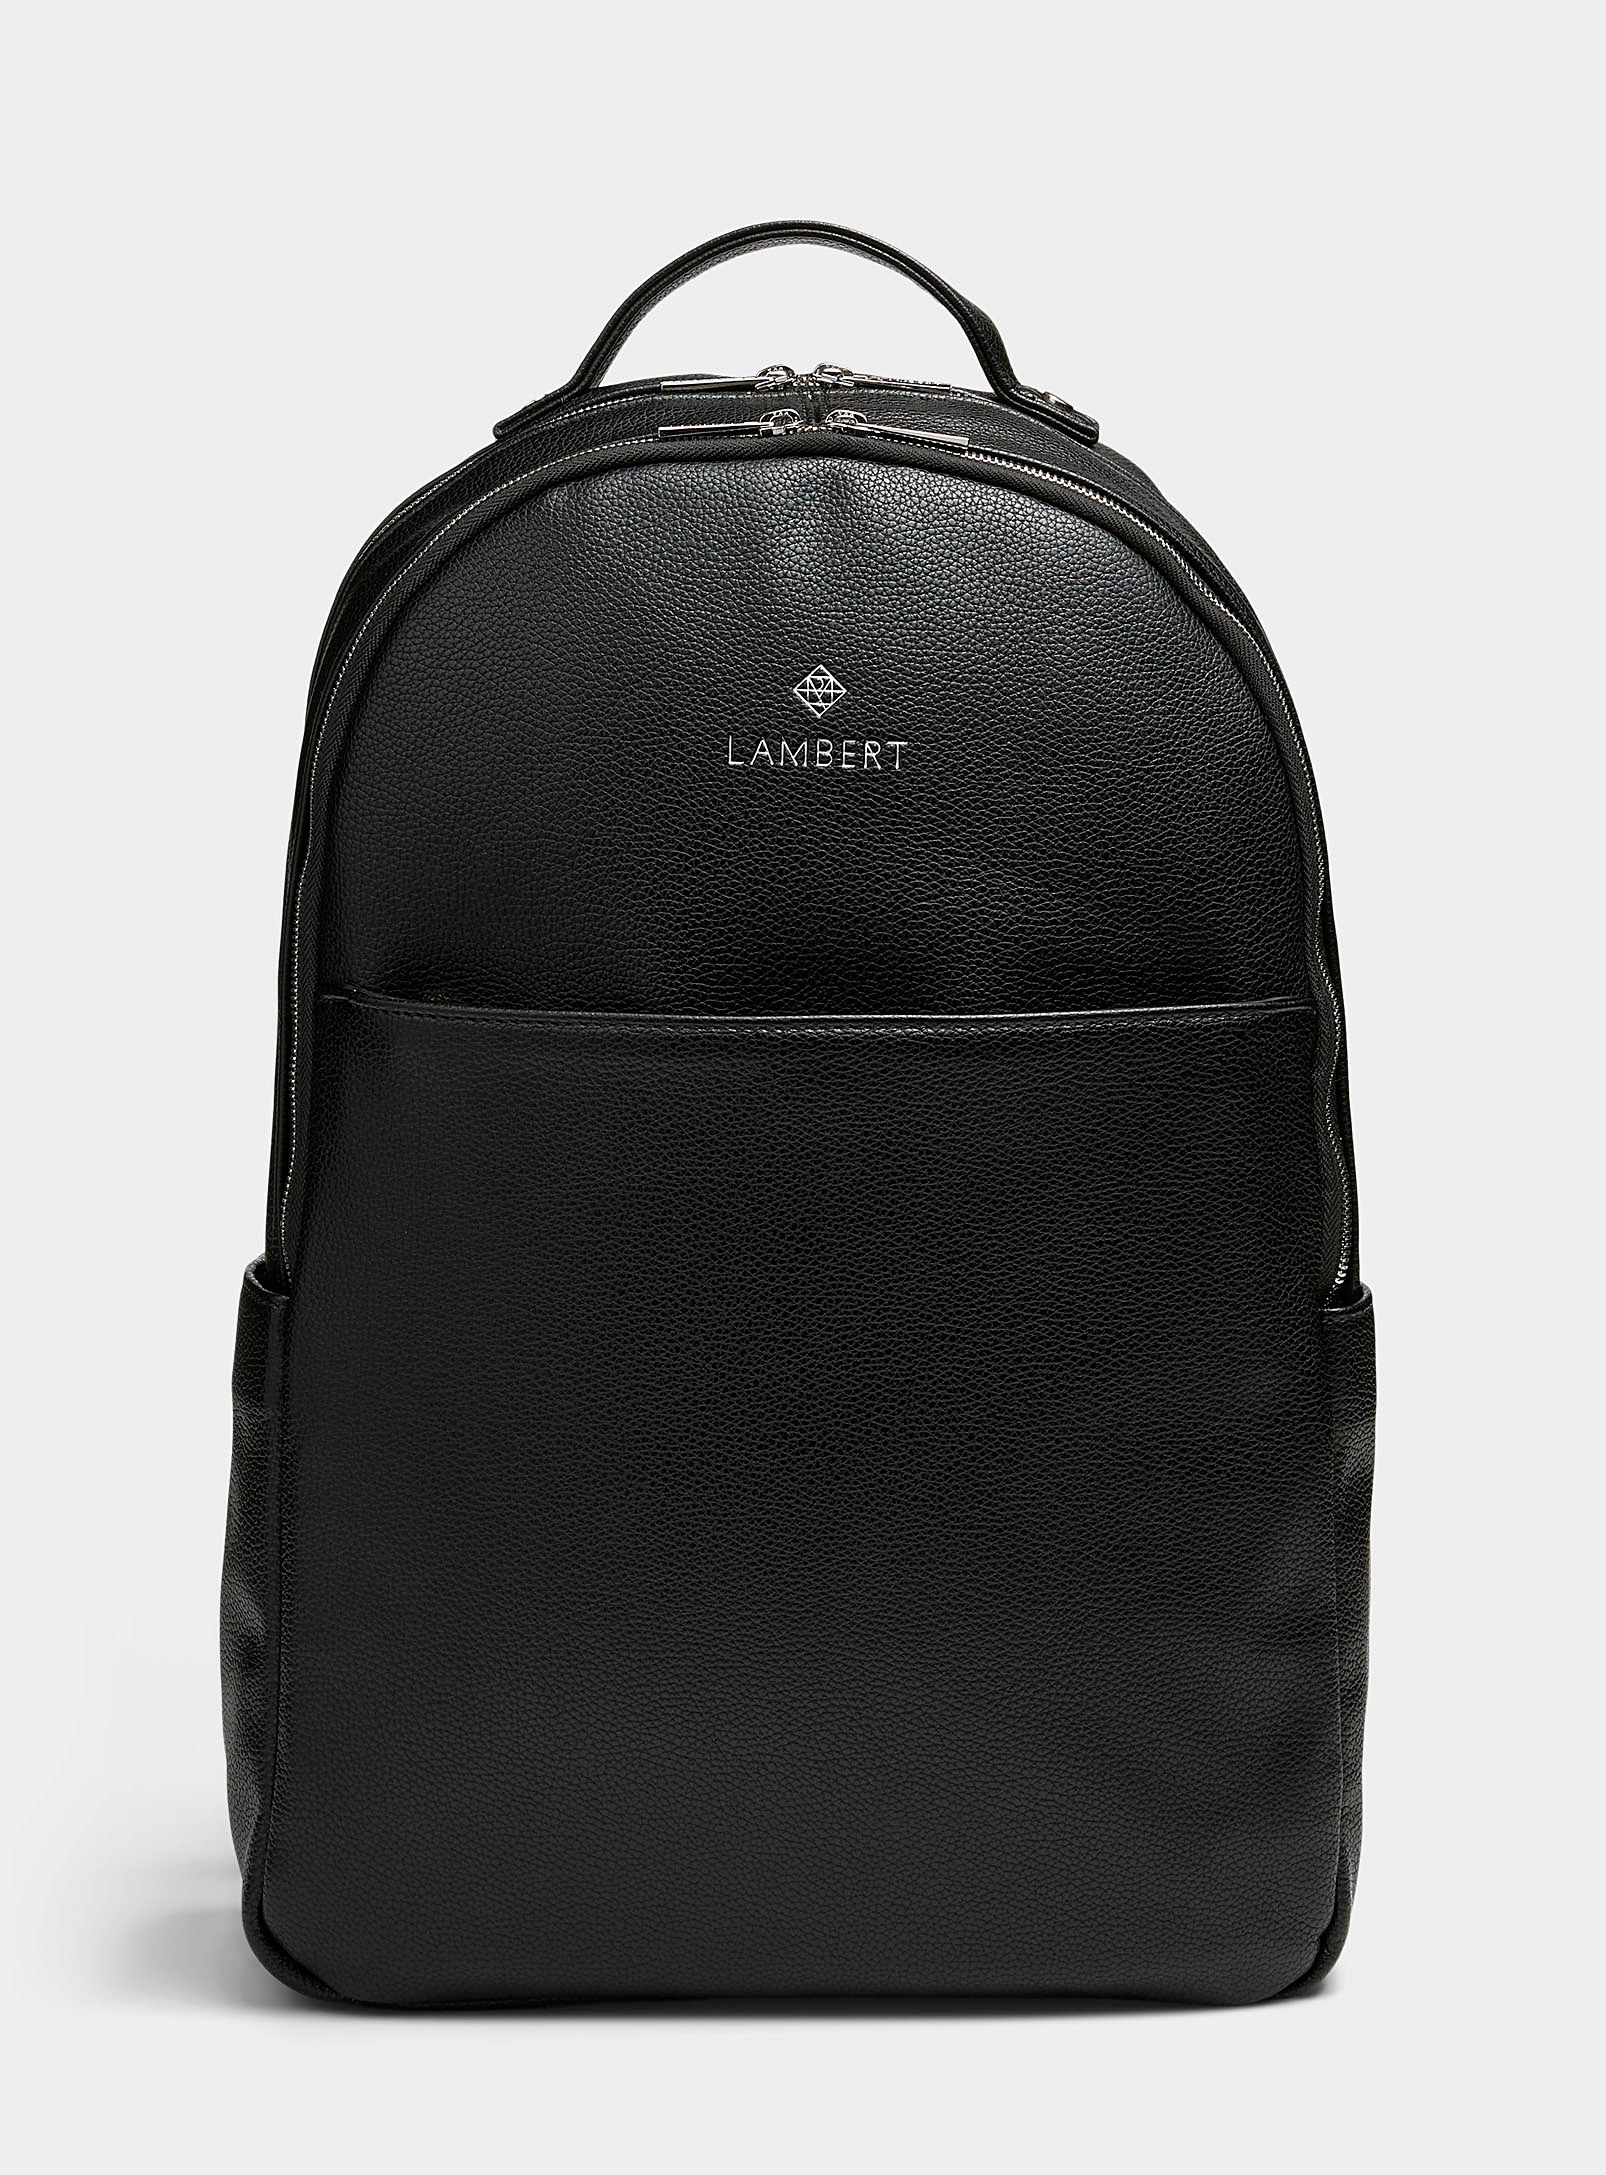 Lambert - Men's Black Charles backpack